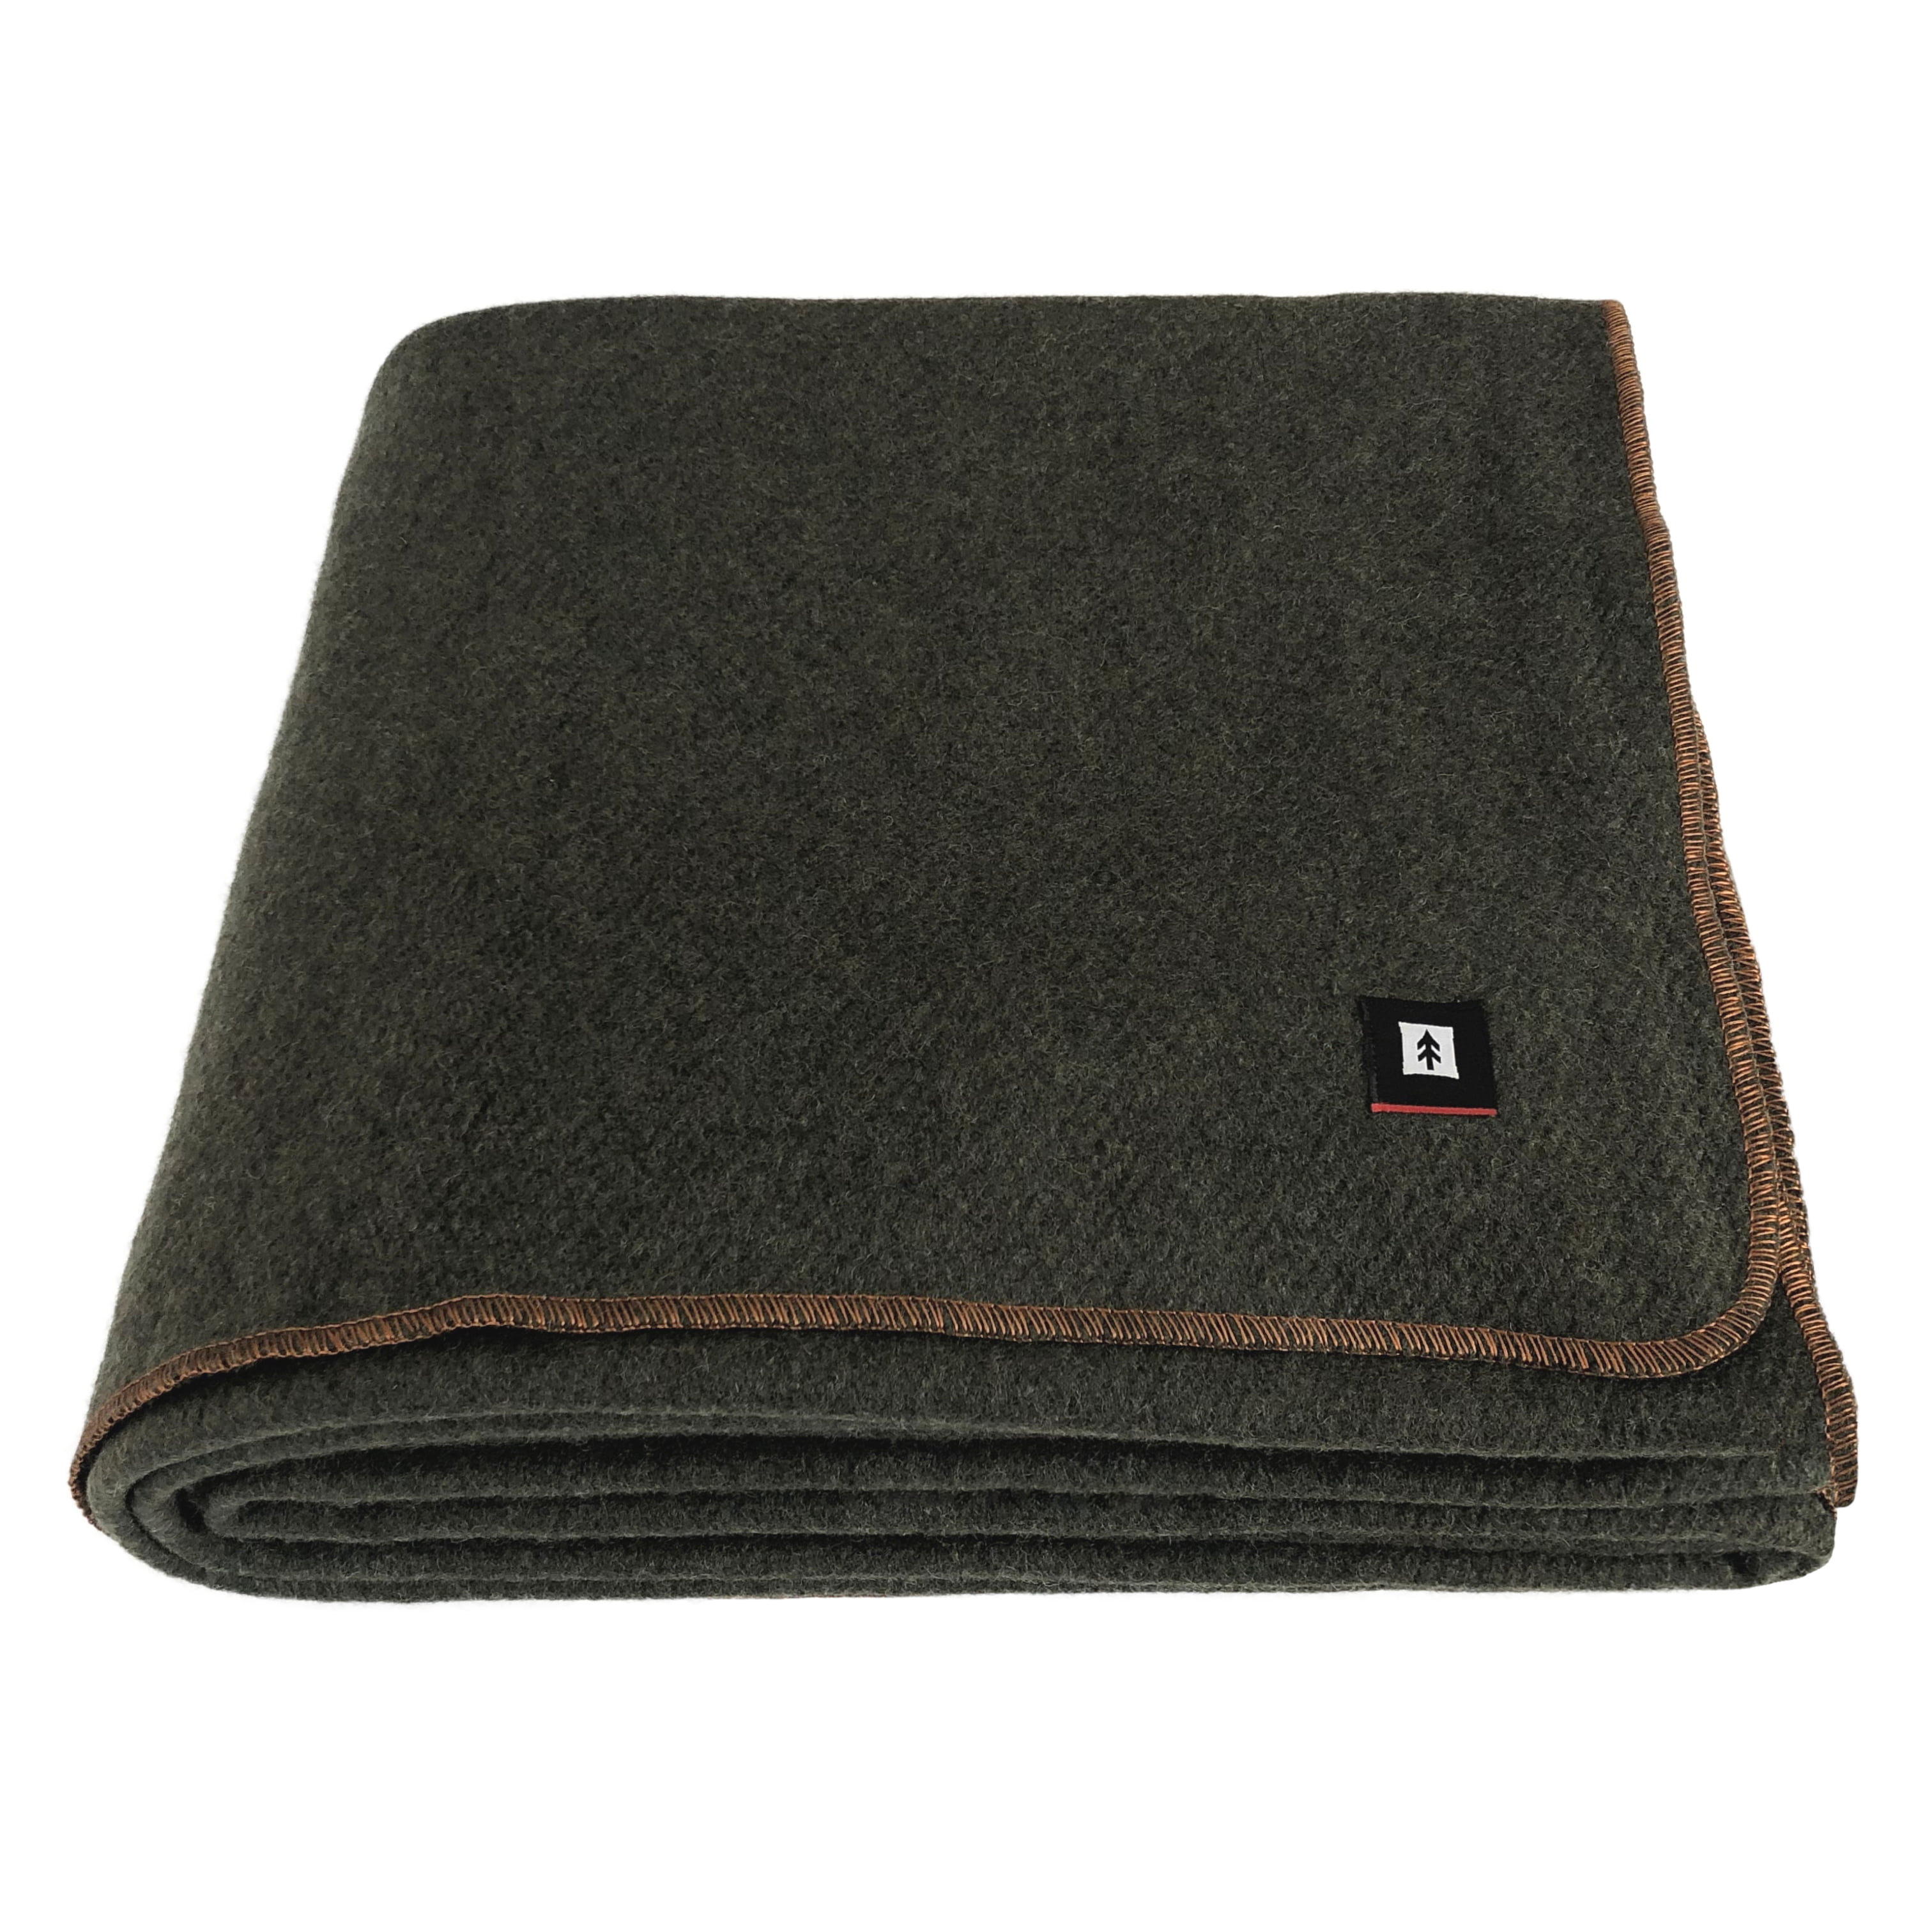 Best 90% Wool Blanket Green Warm Heavy 4lbs Large Washable 66x90 66 x 90 Blanket 